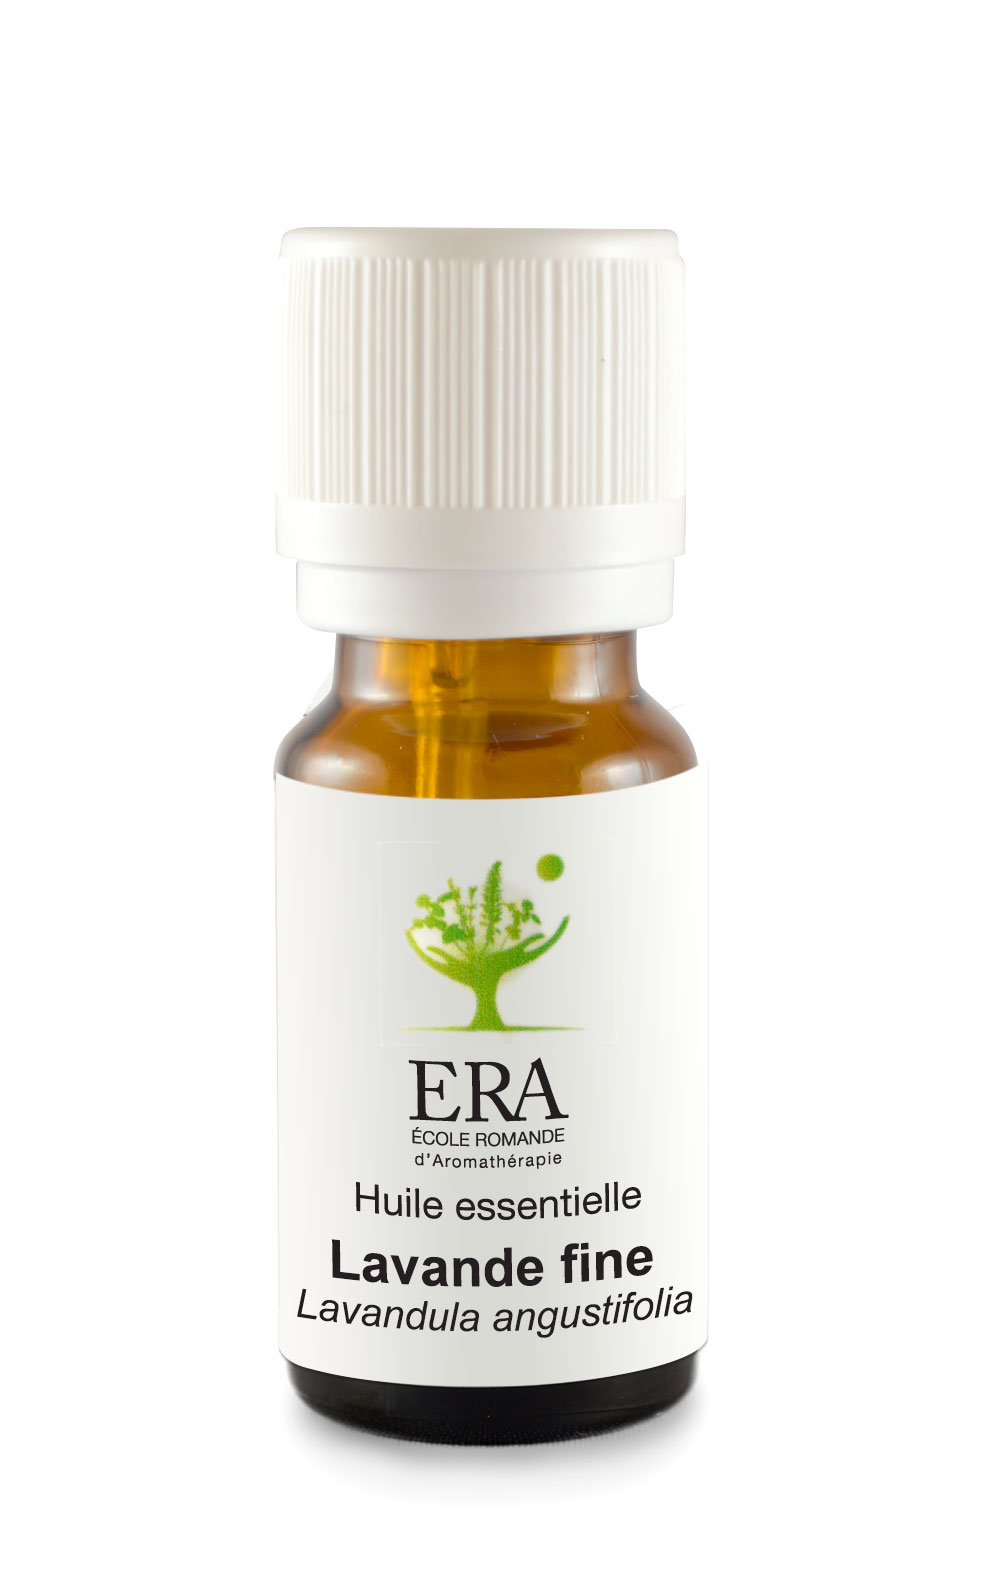 Lavande fine - Lavandula angustifolia - Lamiacées